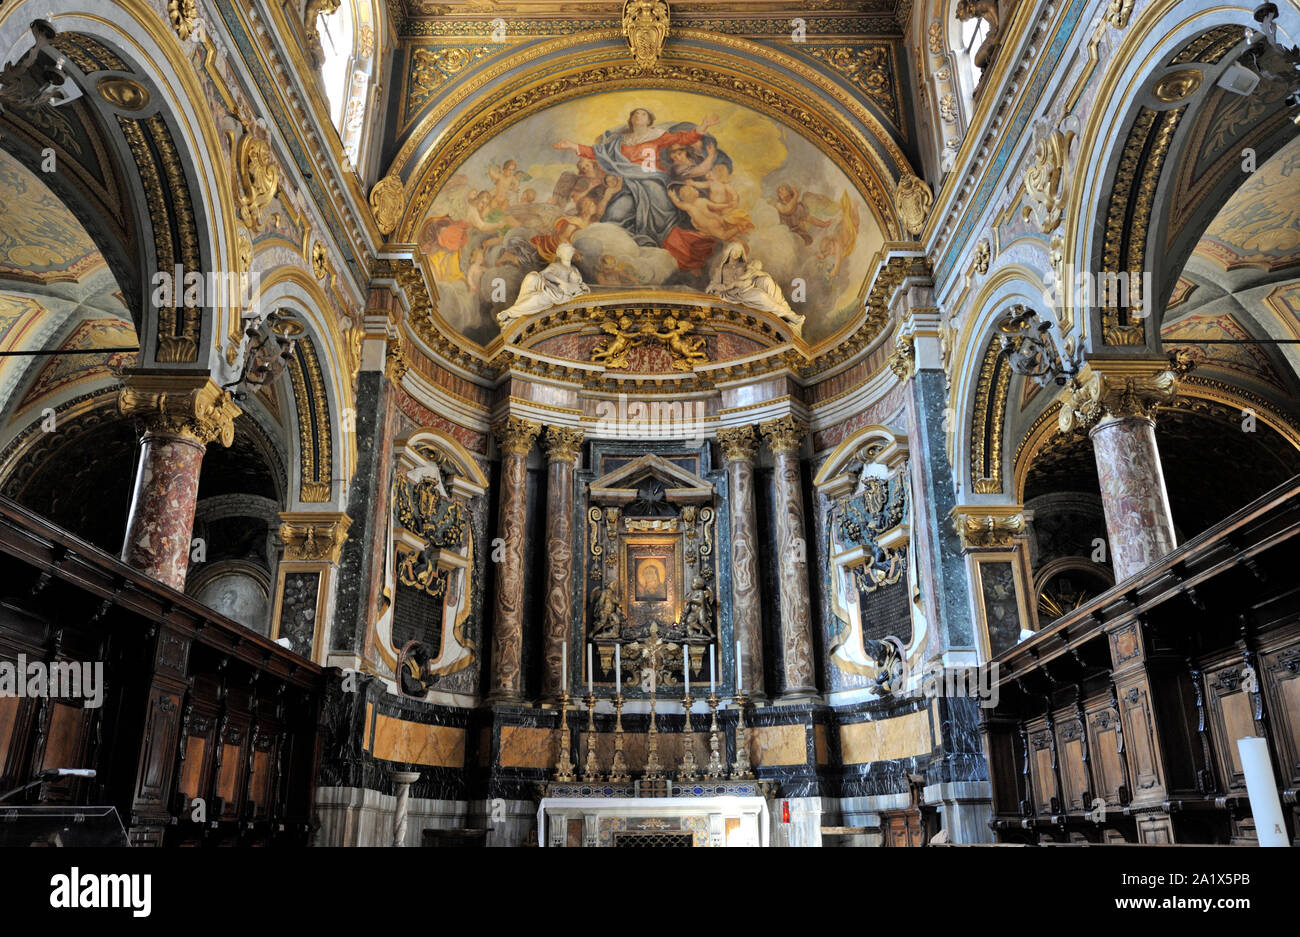 Italia, Roma, la iglesia de Santa Maria in via lata Fotografía de stock -  Alamy